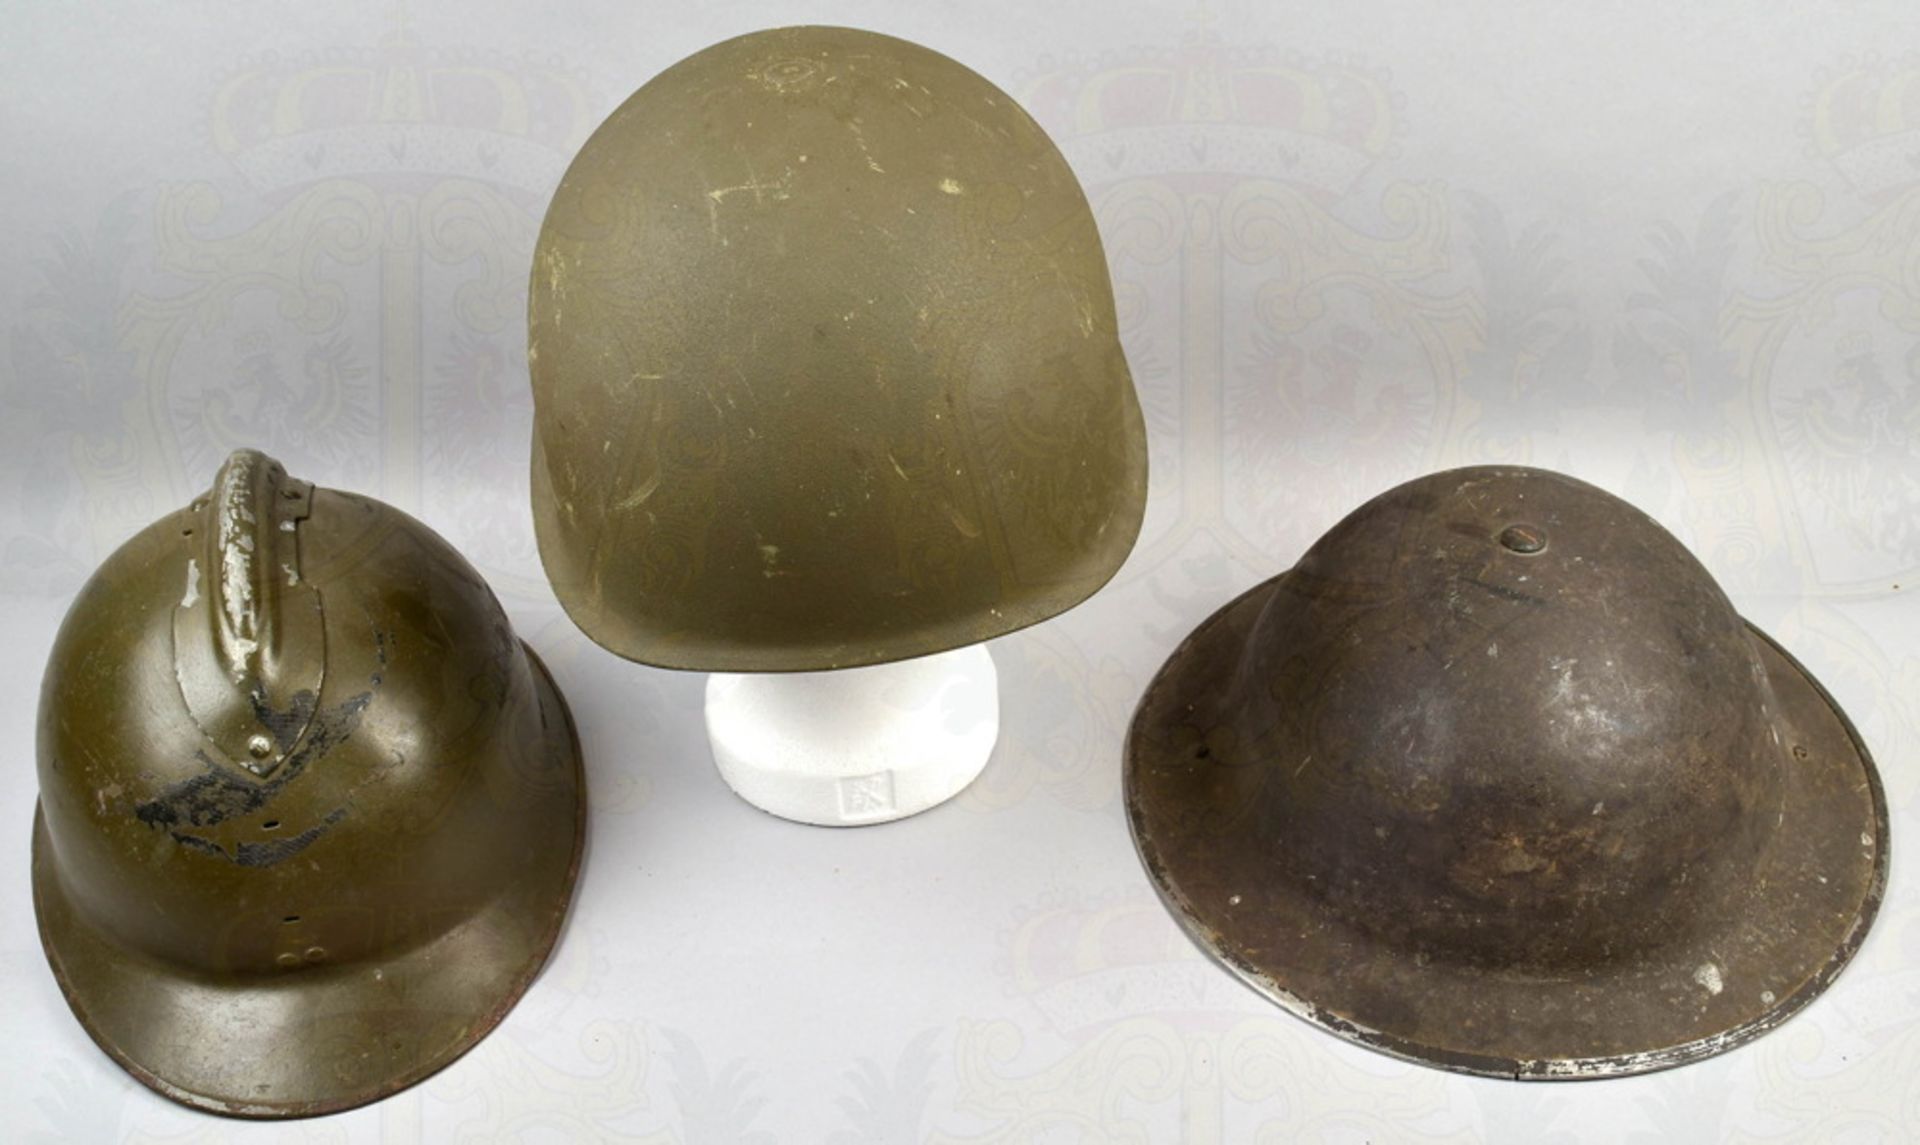 3 steel helmets/combat helmets Germany/France/UK - Image 2 of 3